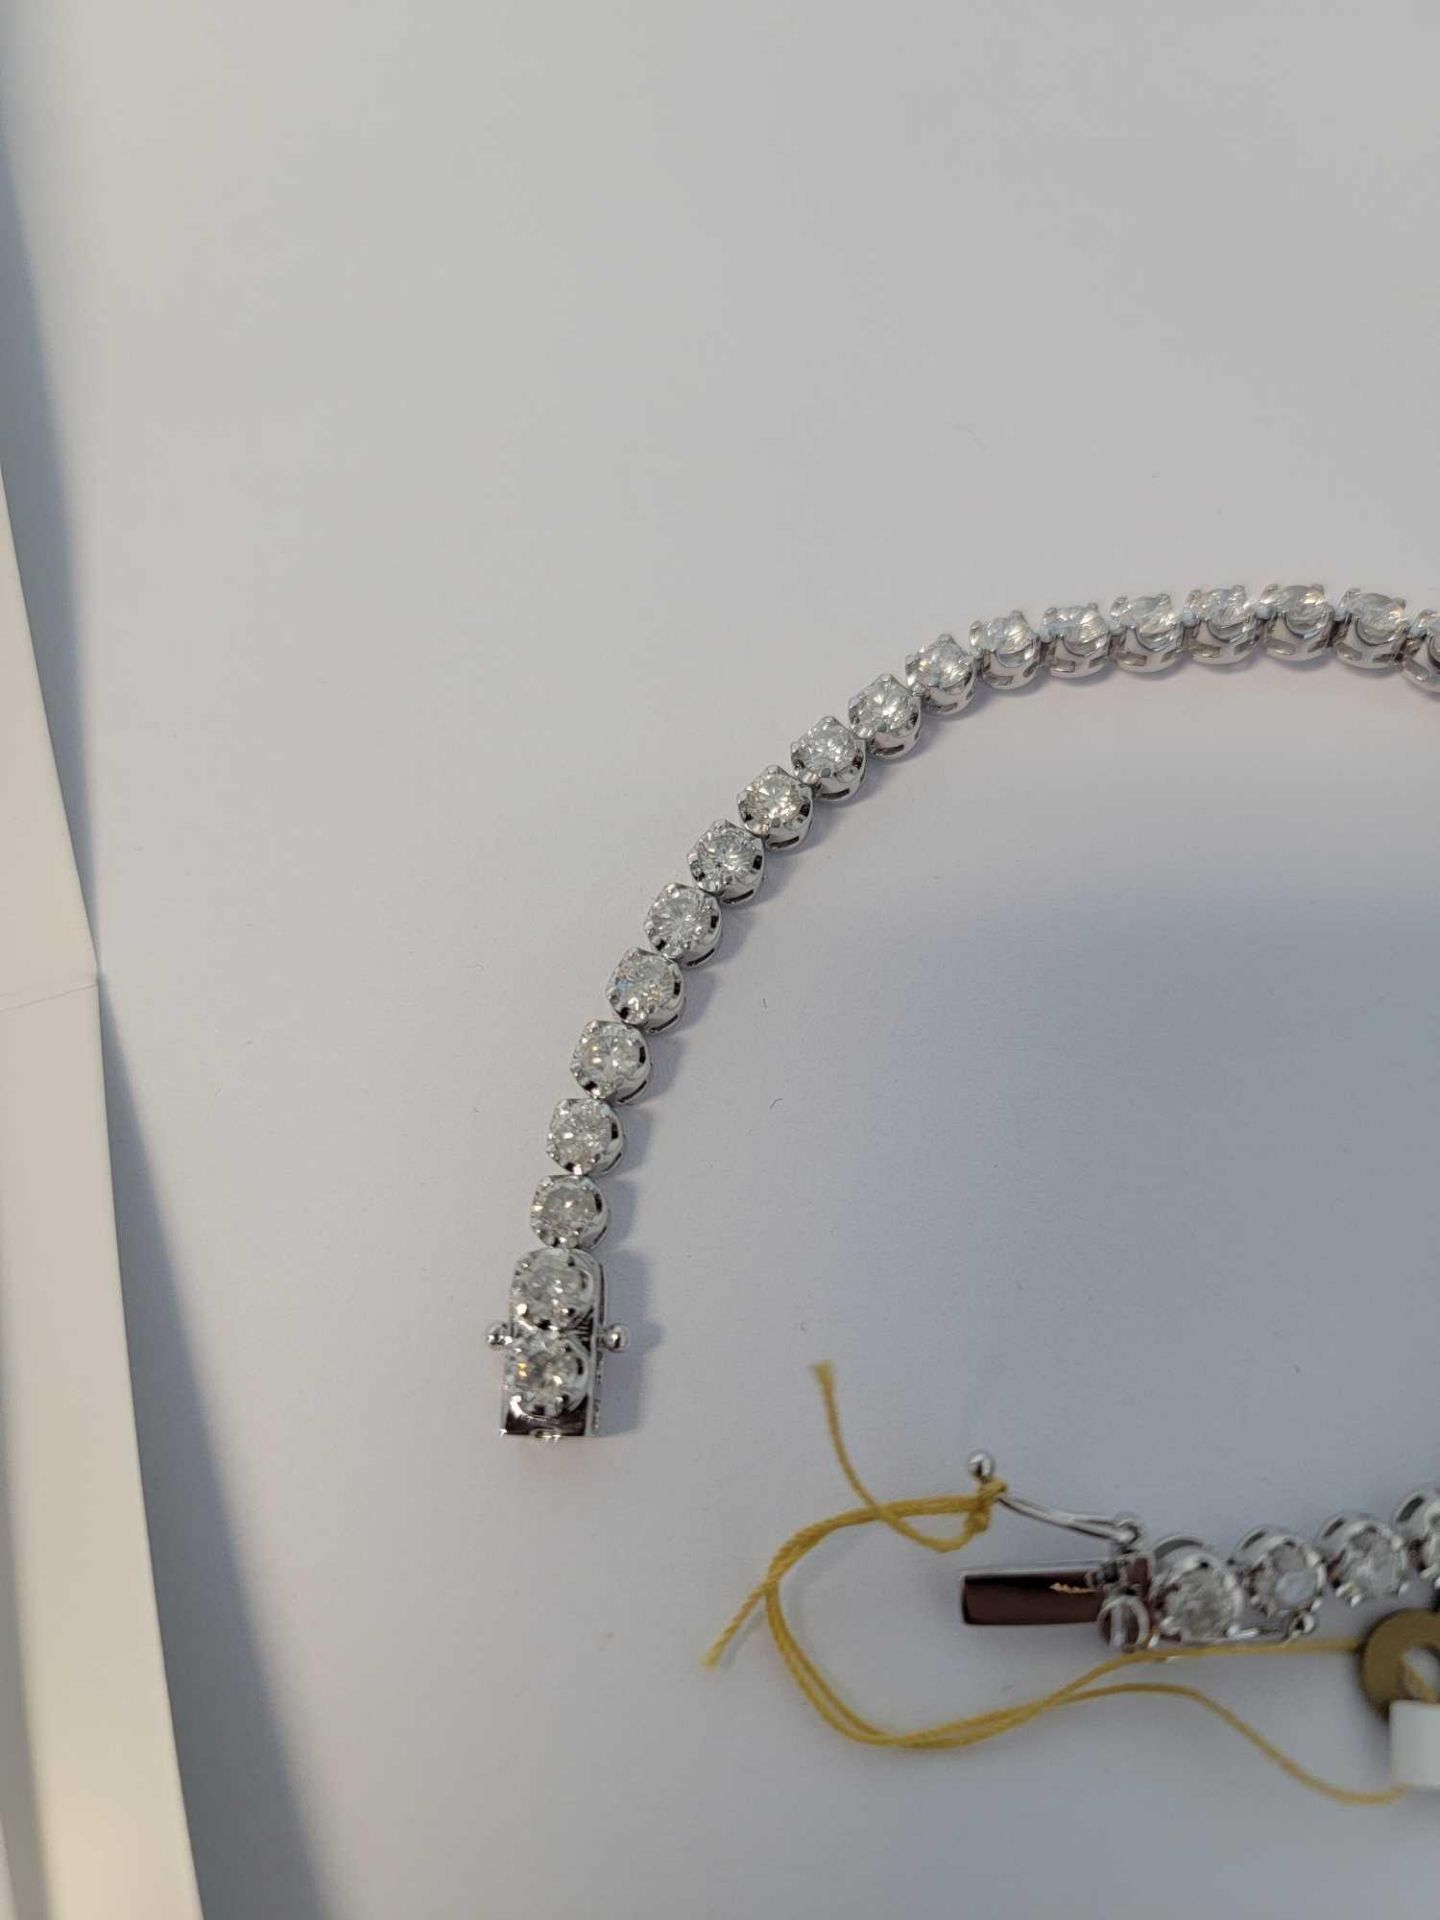 14 kt gold and diamond bracelet, 7.70 cts diamonds, 37 diamonds - Image 2 of 7